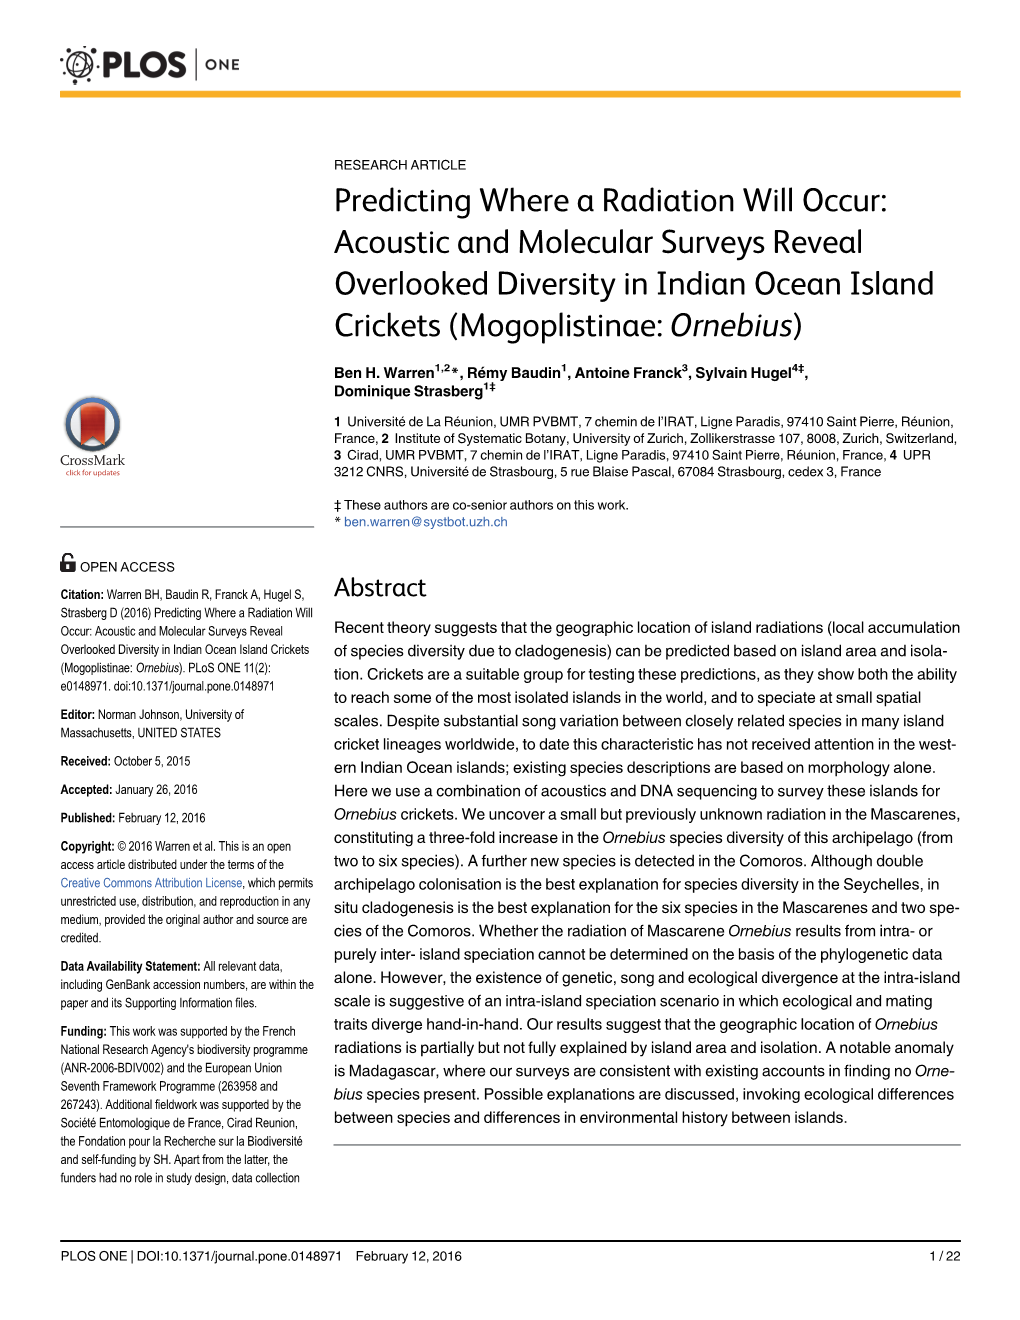 Acoustic and Molecular Surveys Reveal Overlooked Diversity in Indian Ocean Island Crickets (Mogoplistinae: Ornebius)